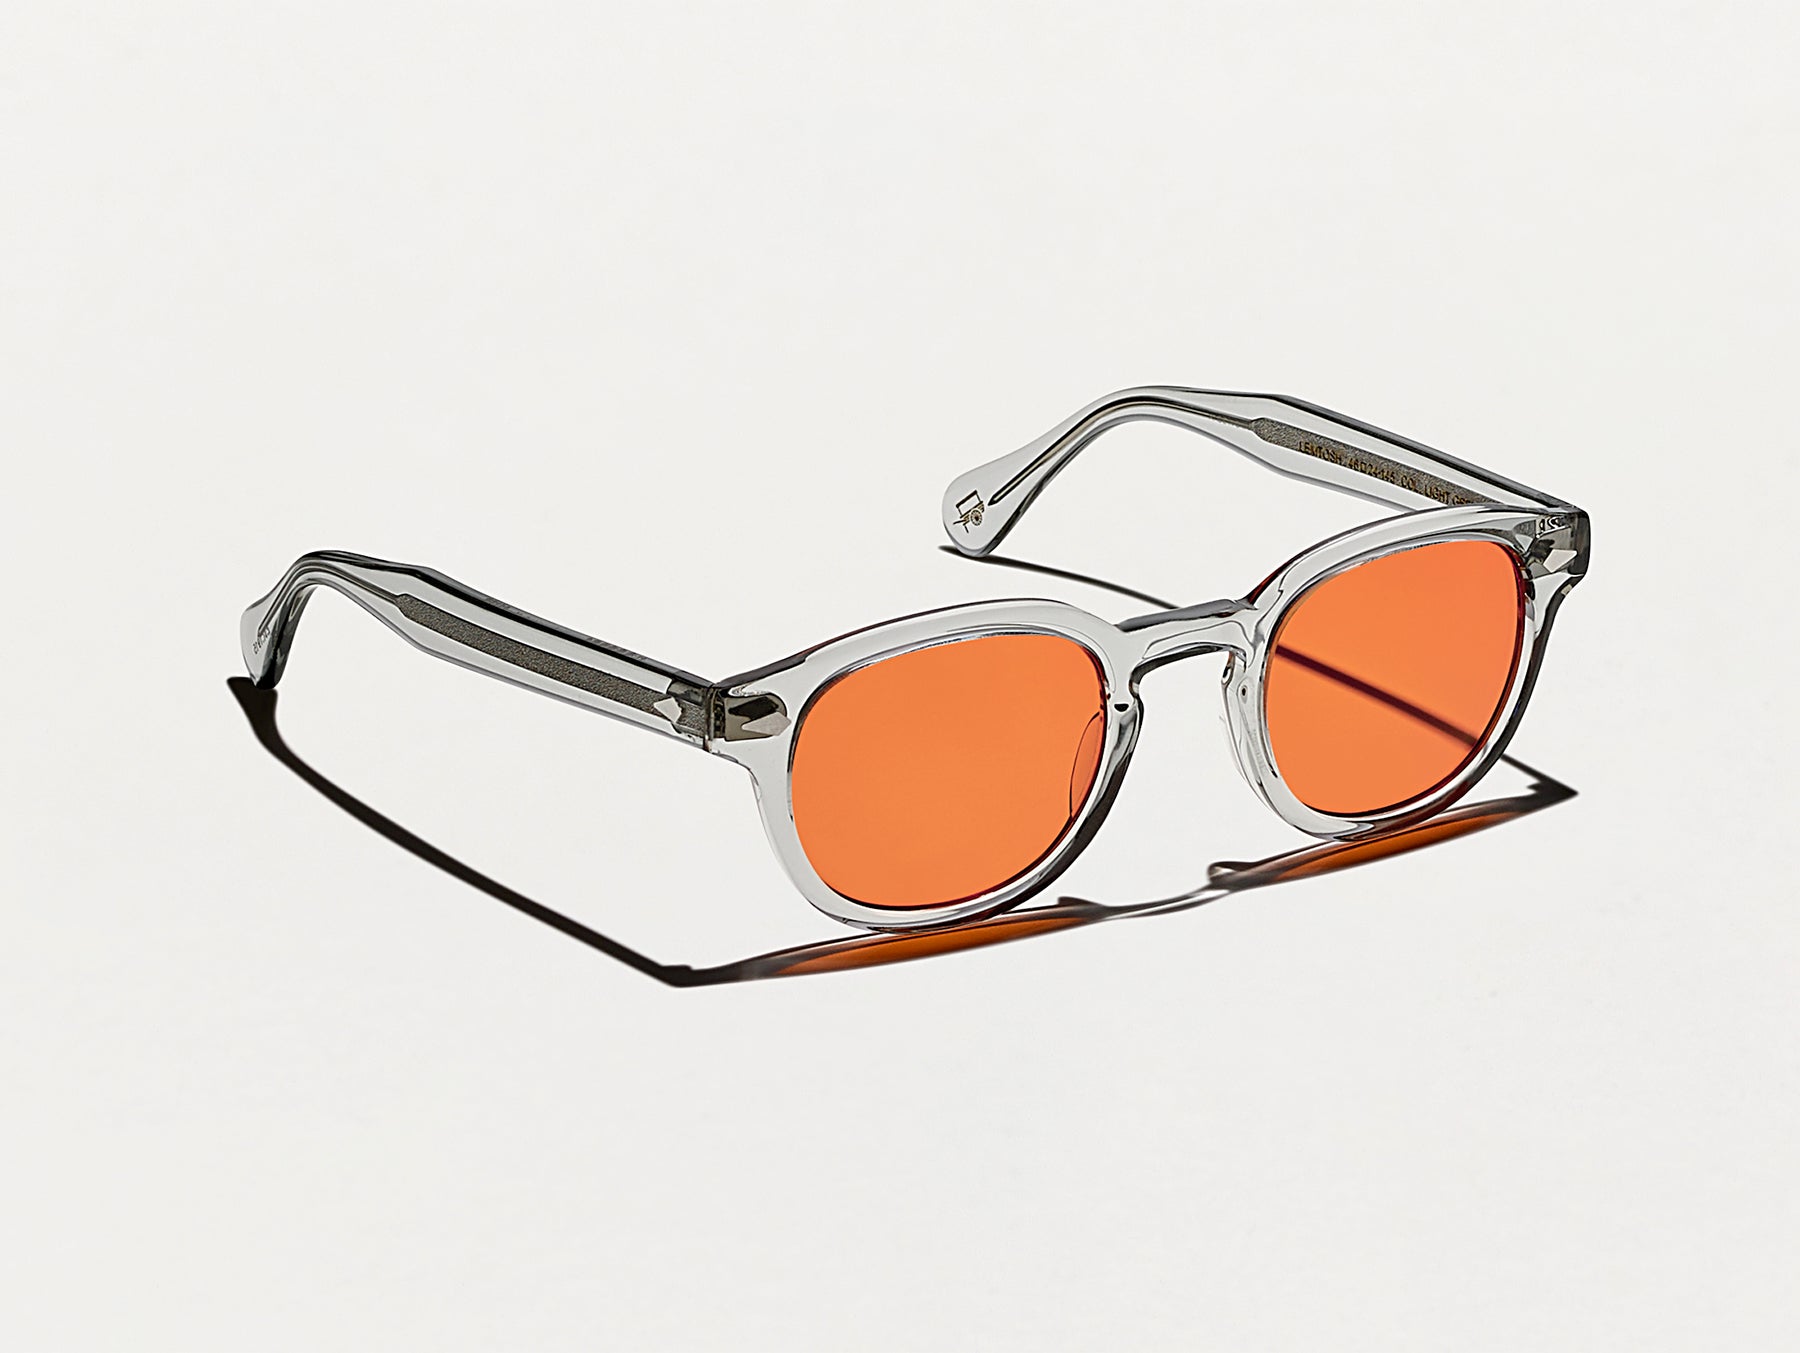 The LEMTOSH Light Grey with Woodstock Orange Tinted Lenses